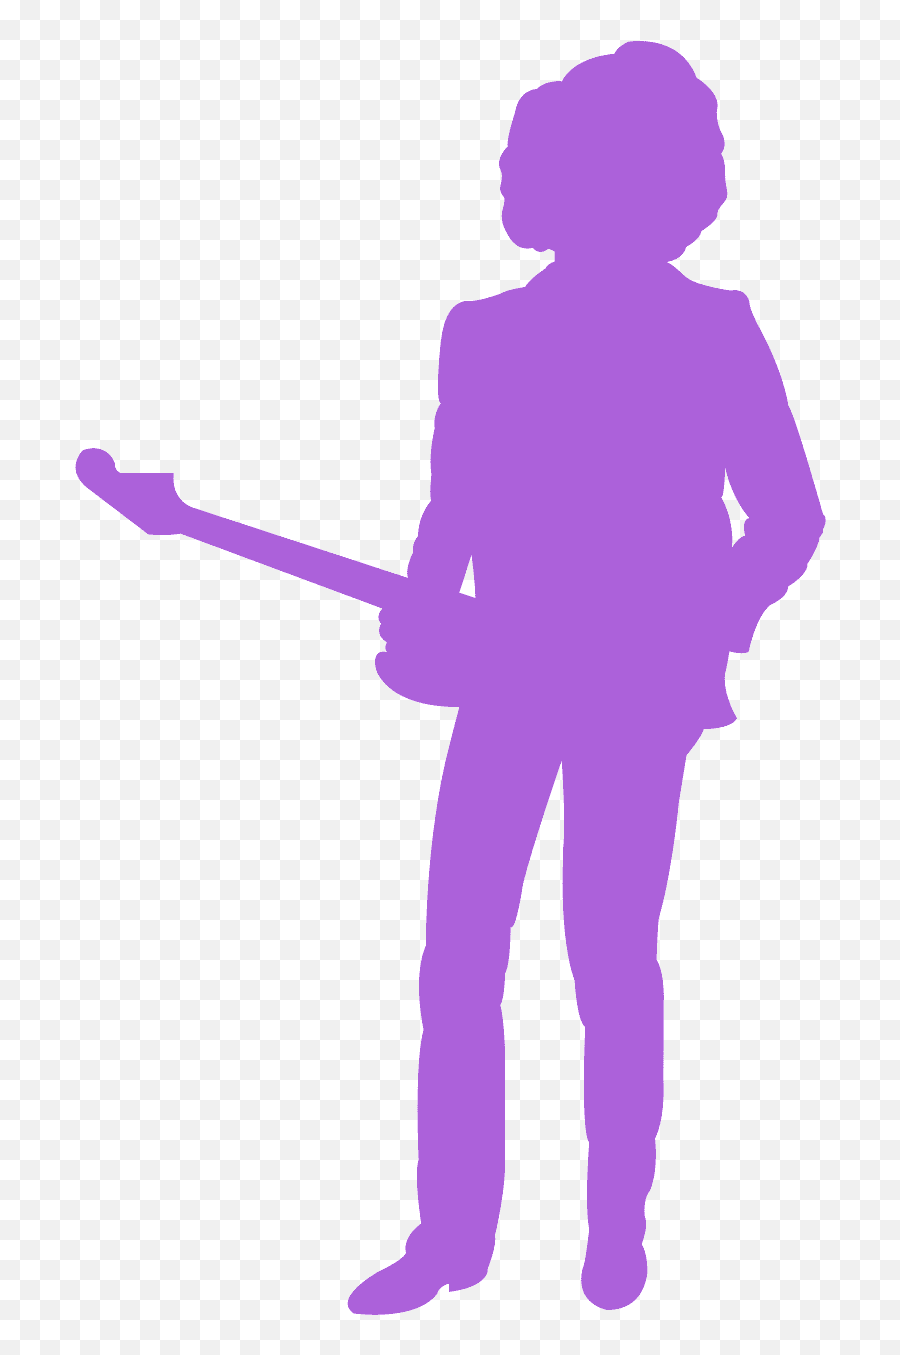 jimi hendrix guitar silhouette